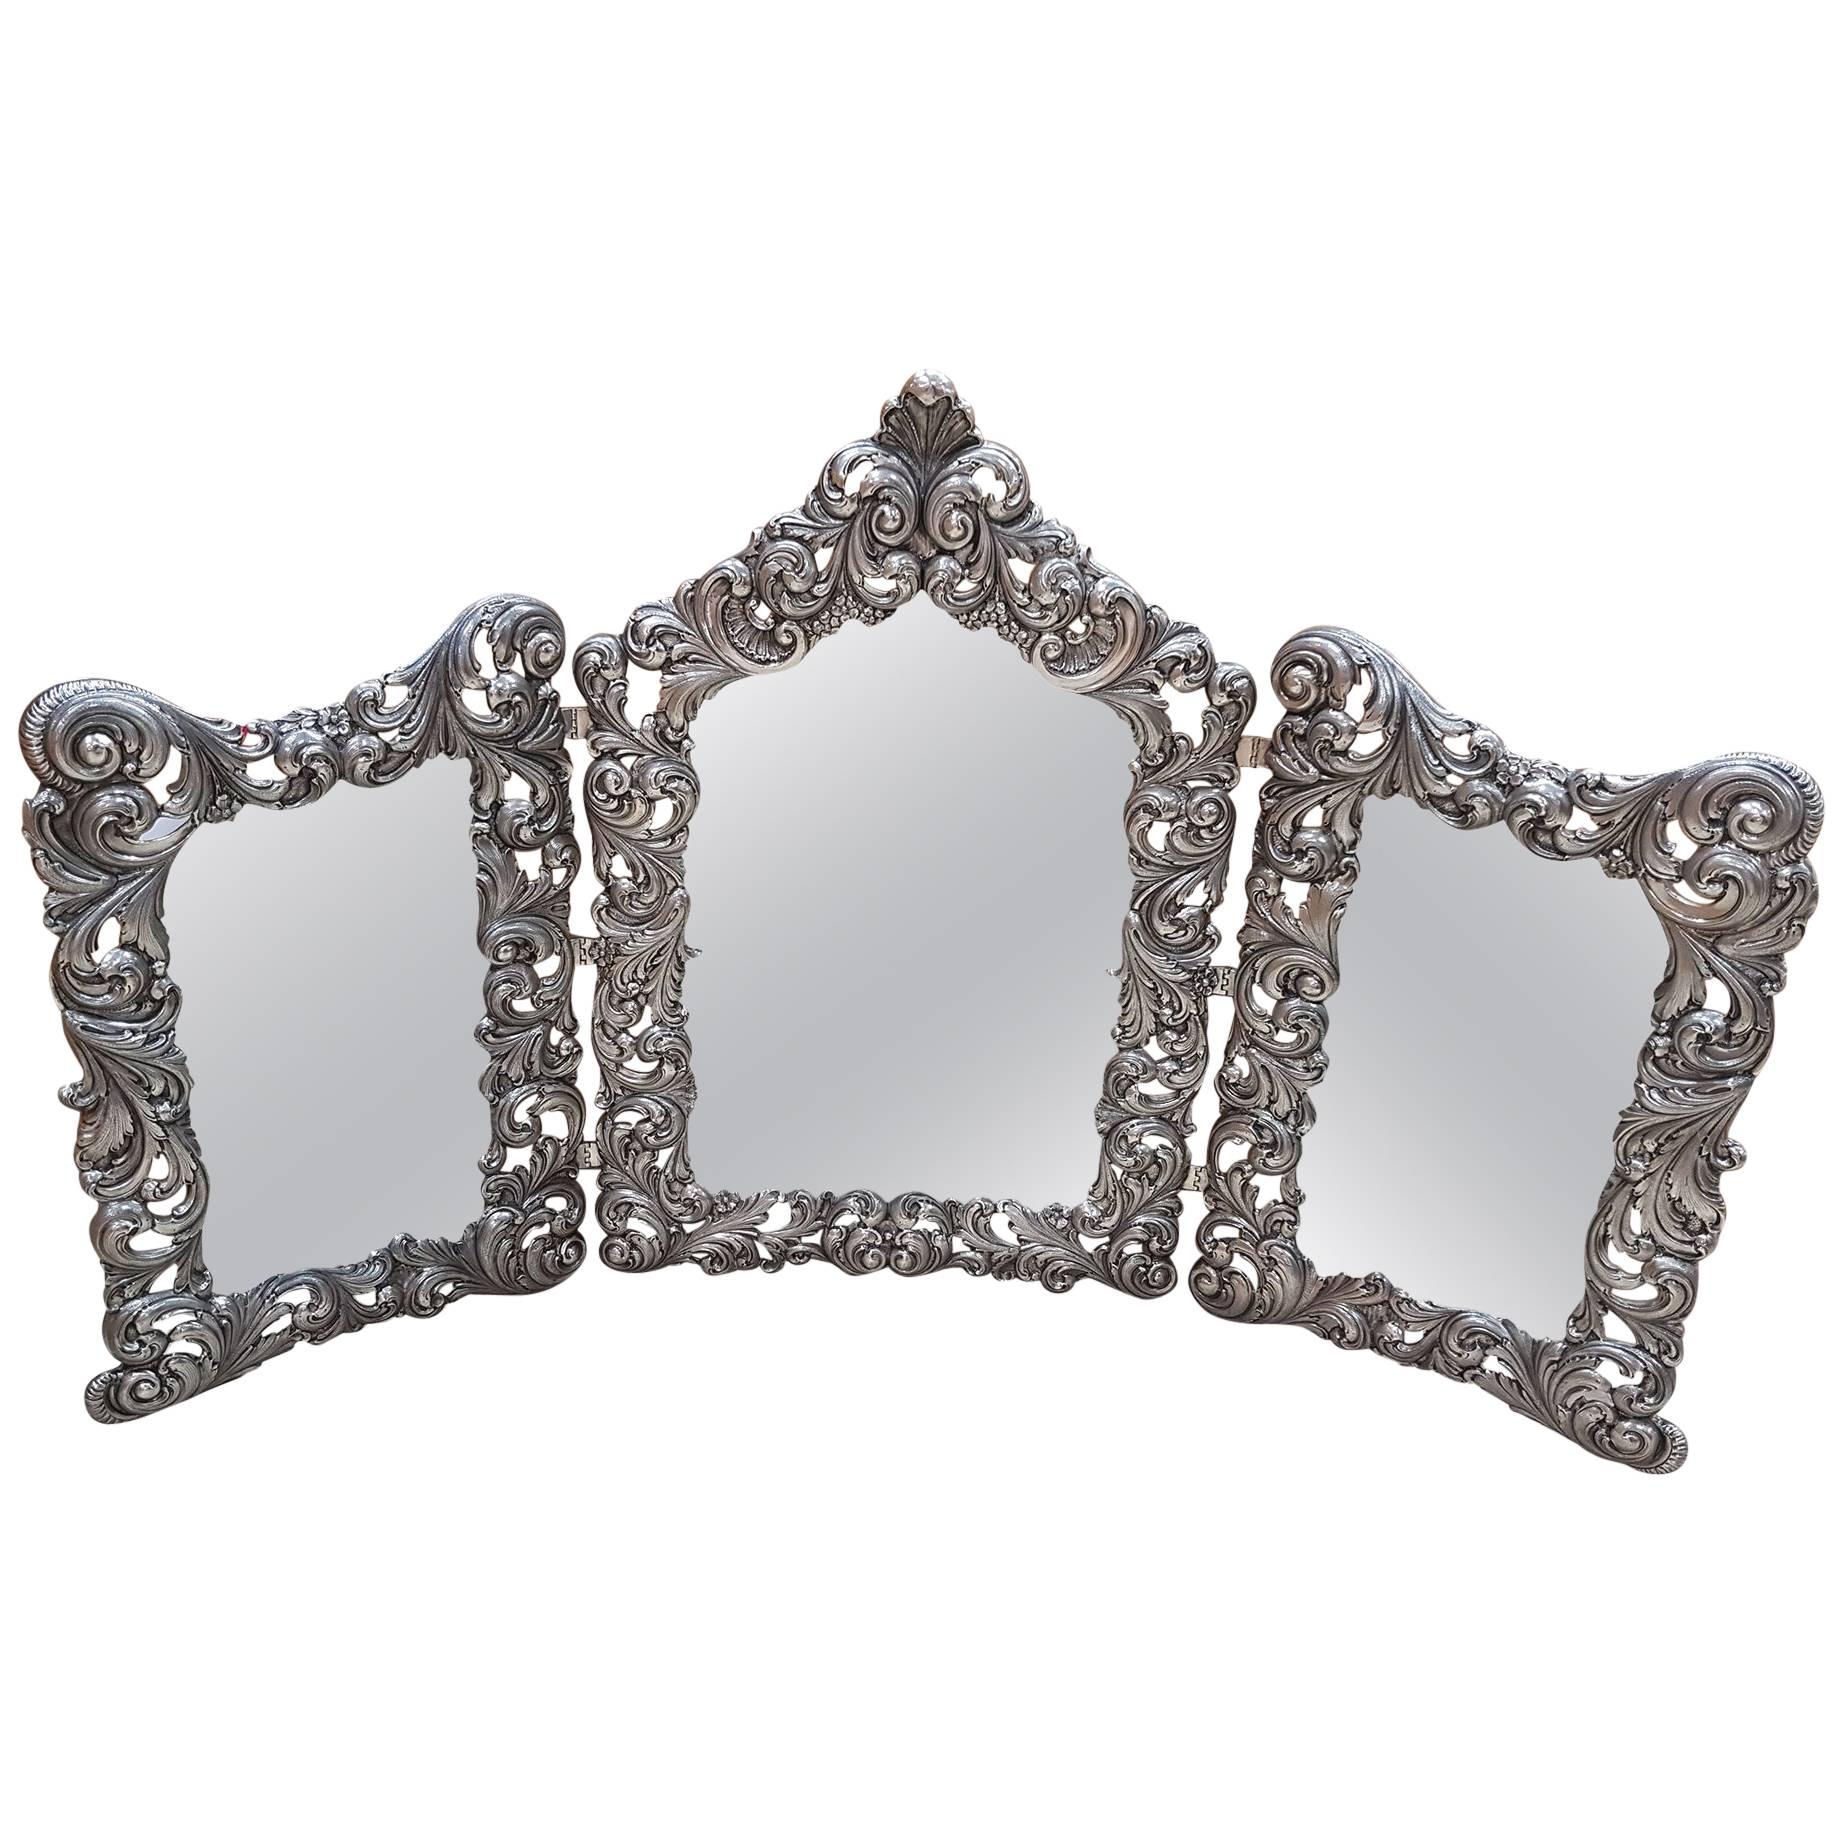 20th Century Italian Sterling Silver Handmade Triptych Mirror Baroque revival